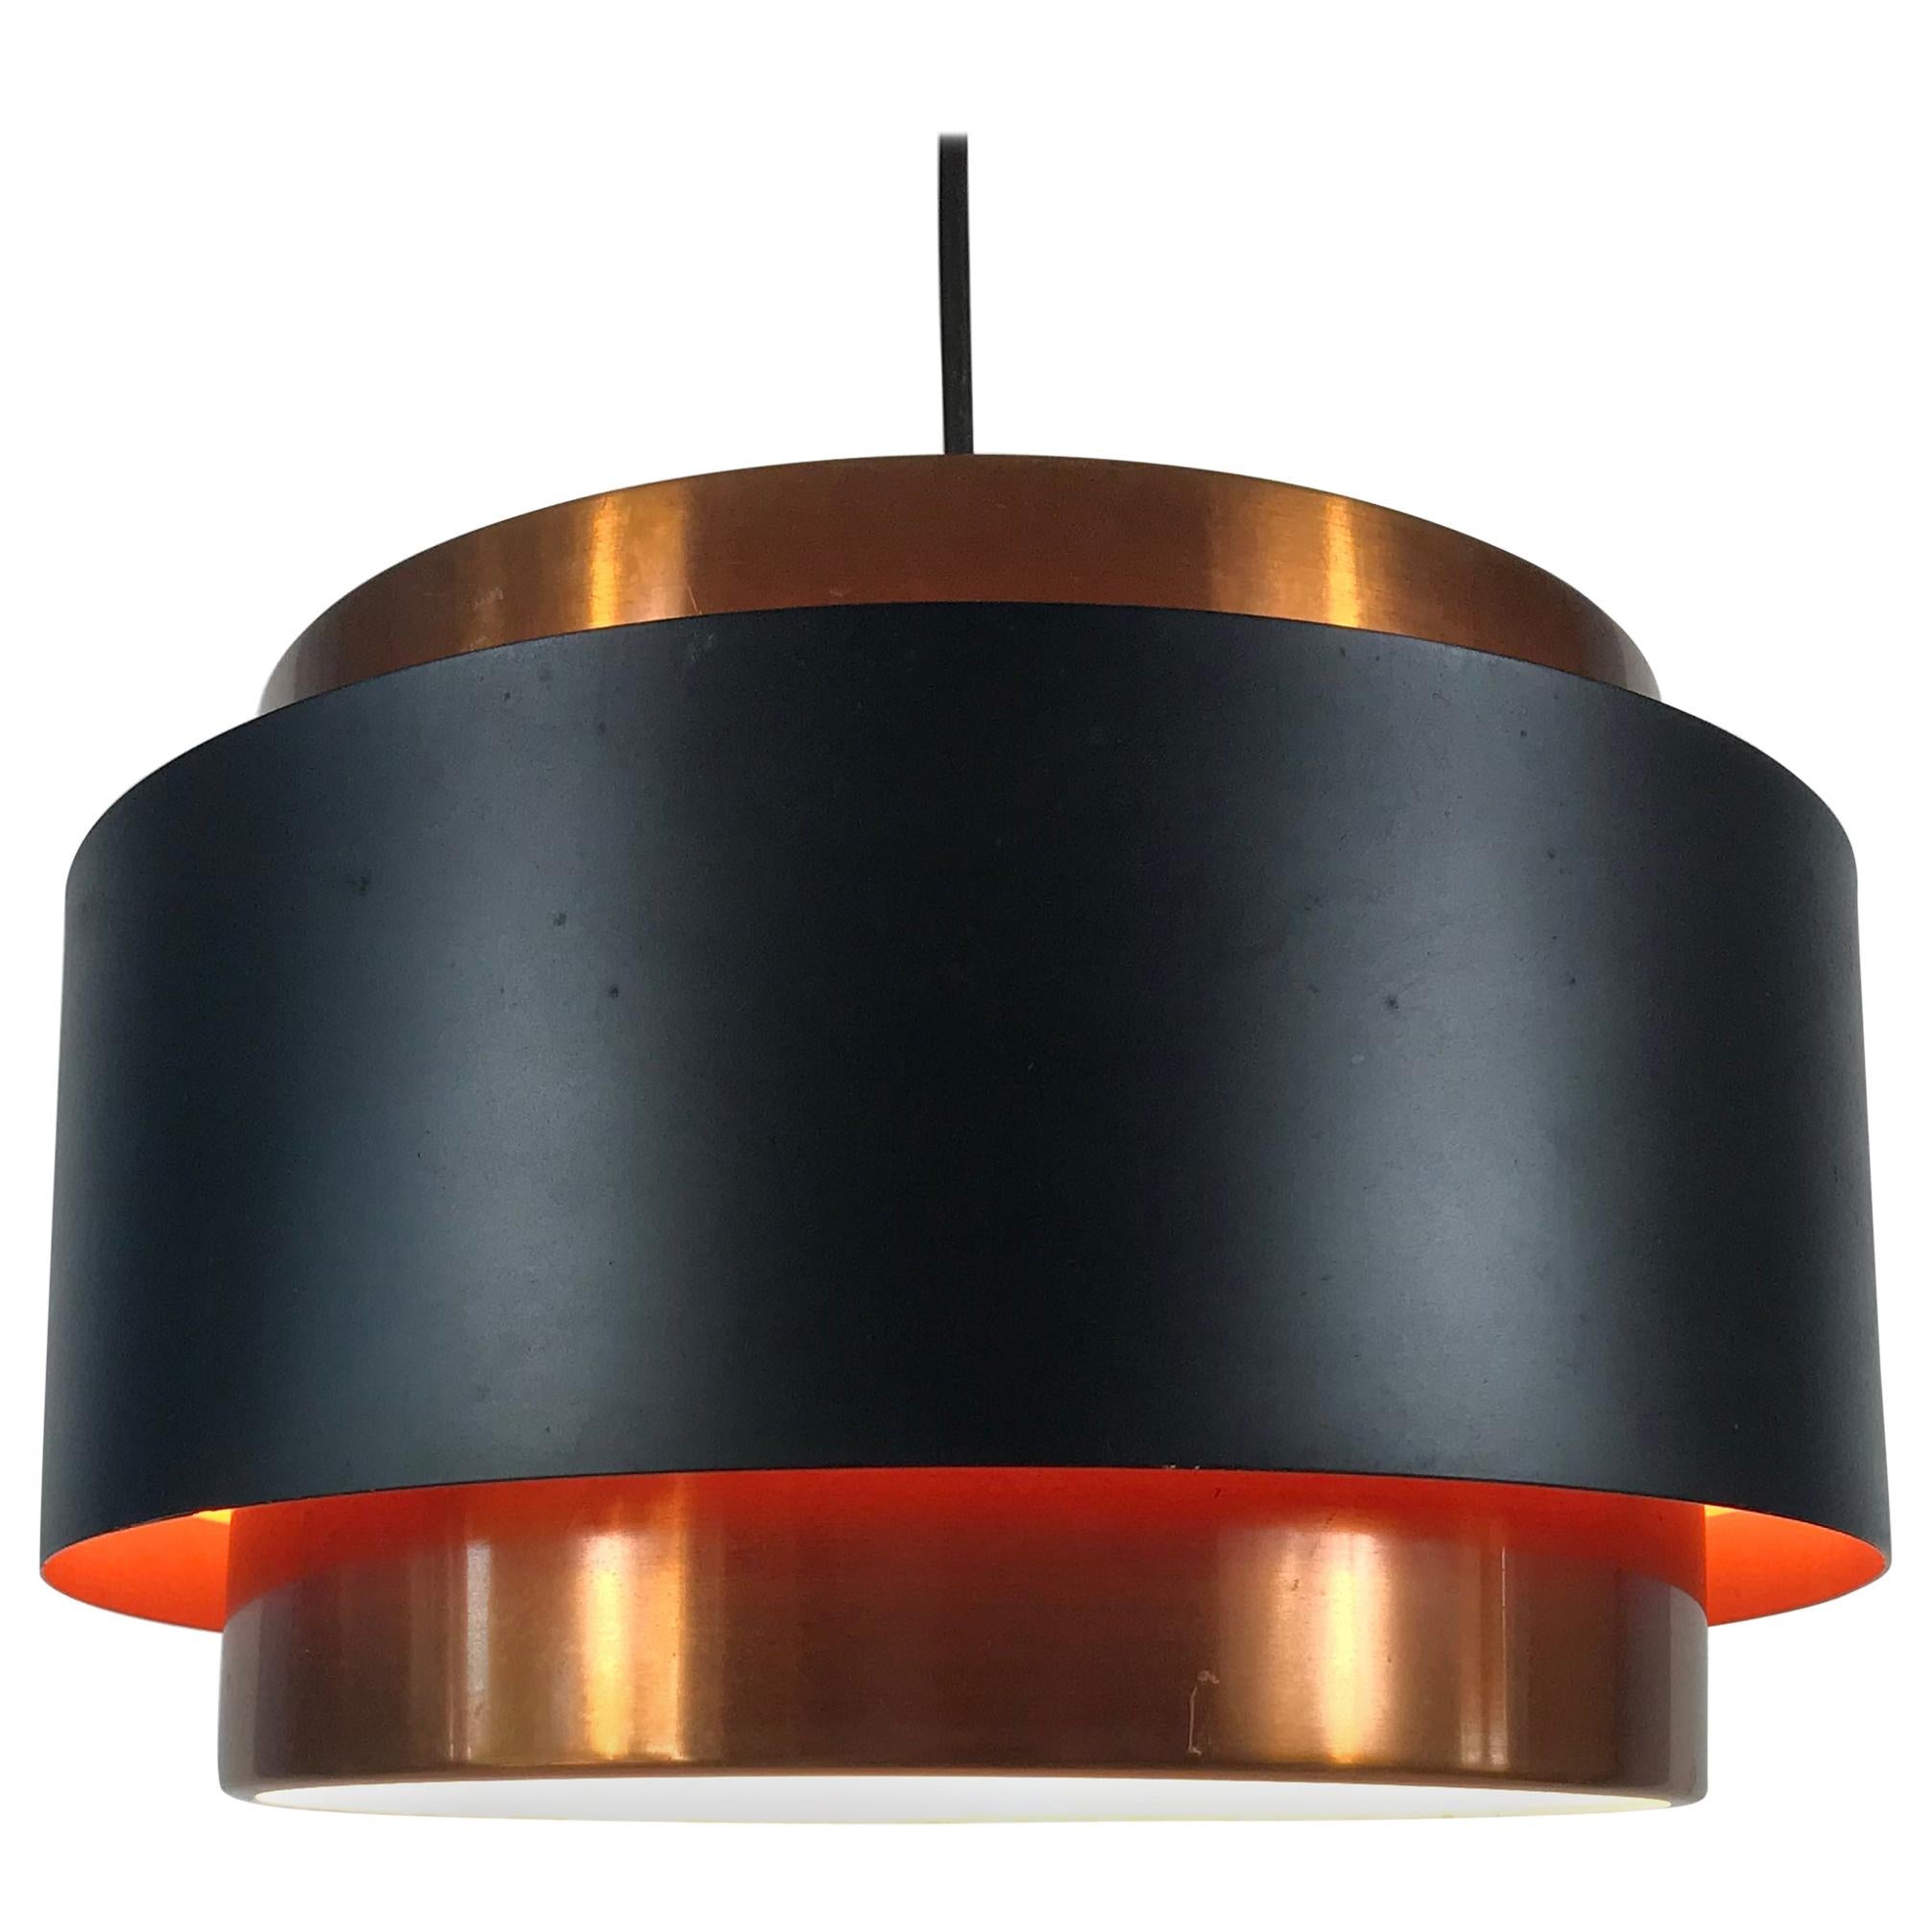 Copper and Black Saturn Pendant Lamp by Jo Hammerborg for Fog & Mørup, 1960s